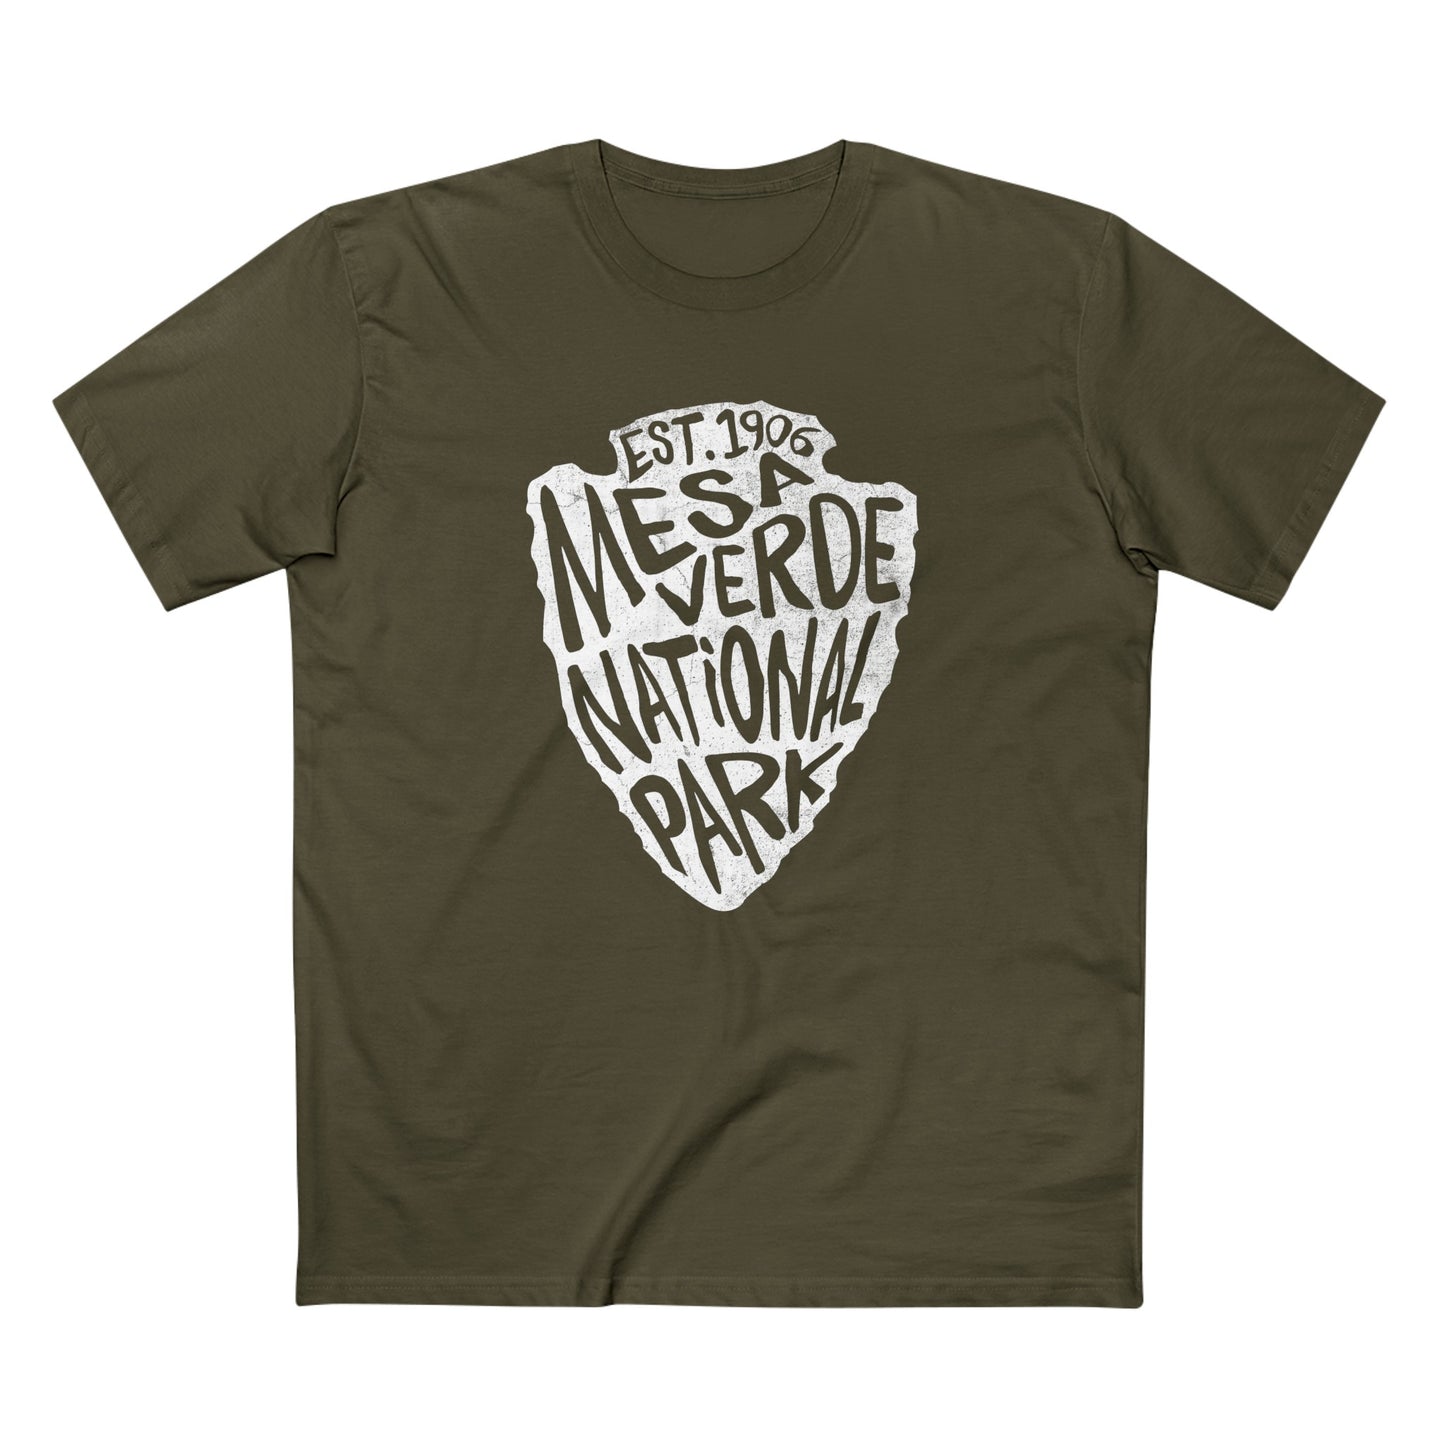 Mesa Verde National Park T-Shirt - Arrow Head Design